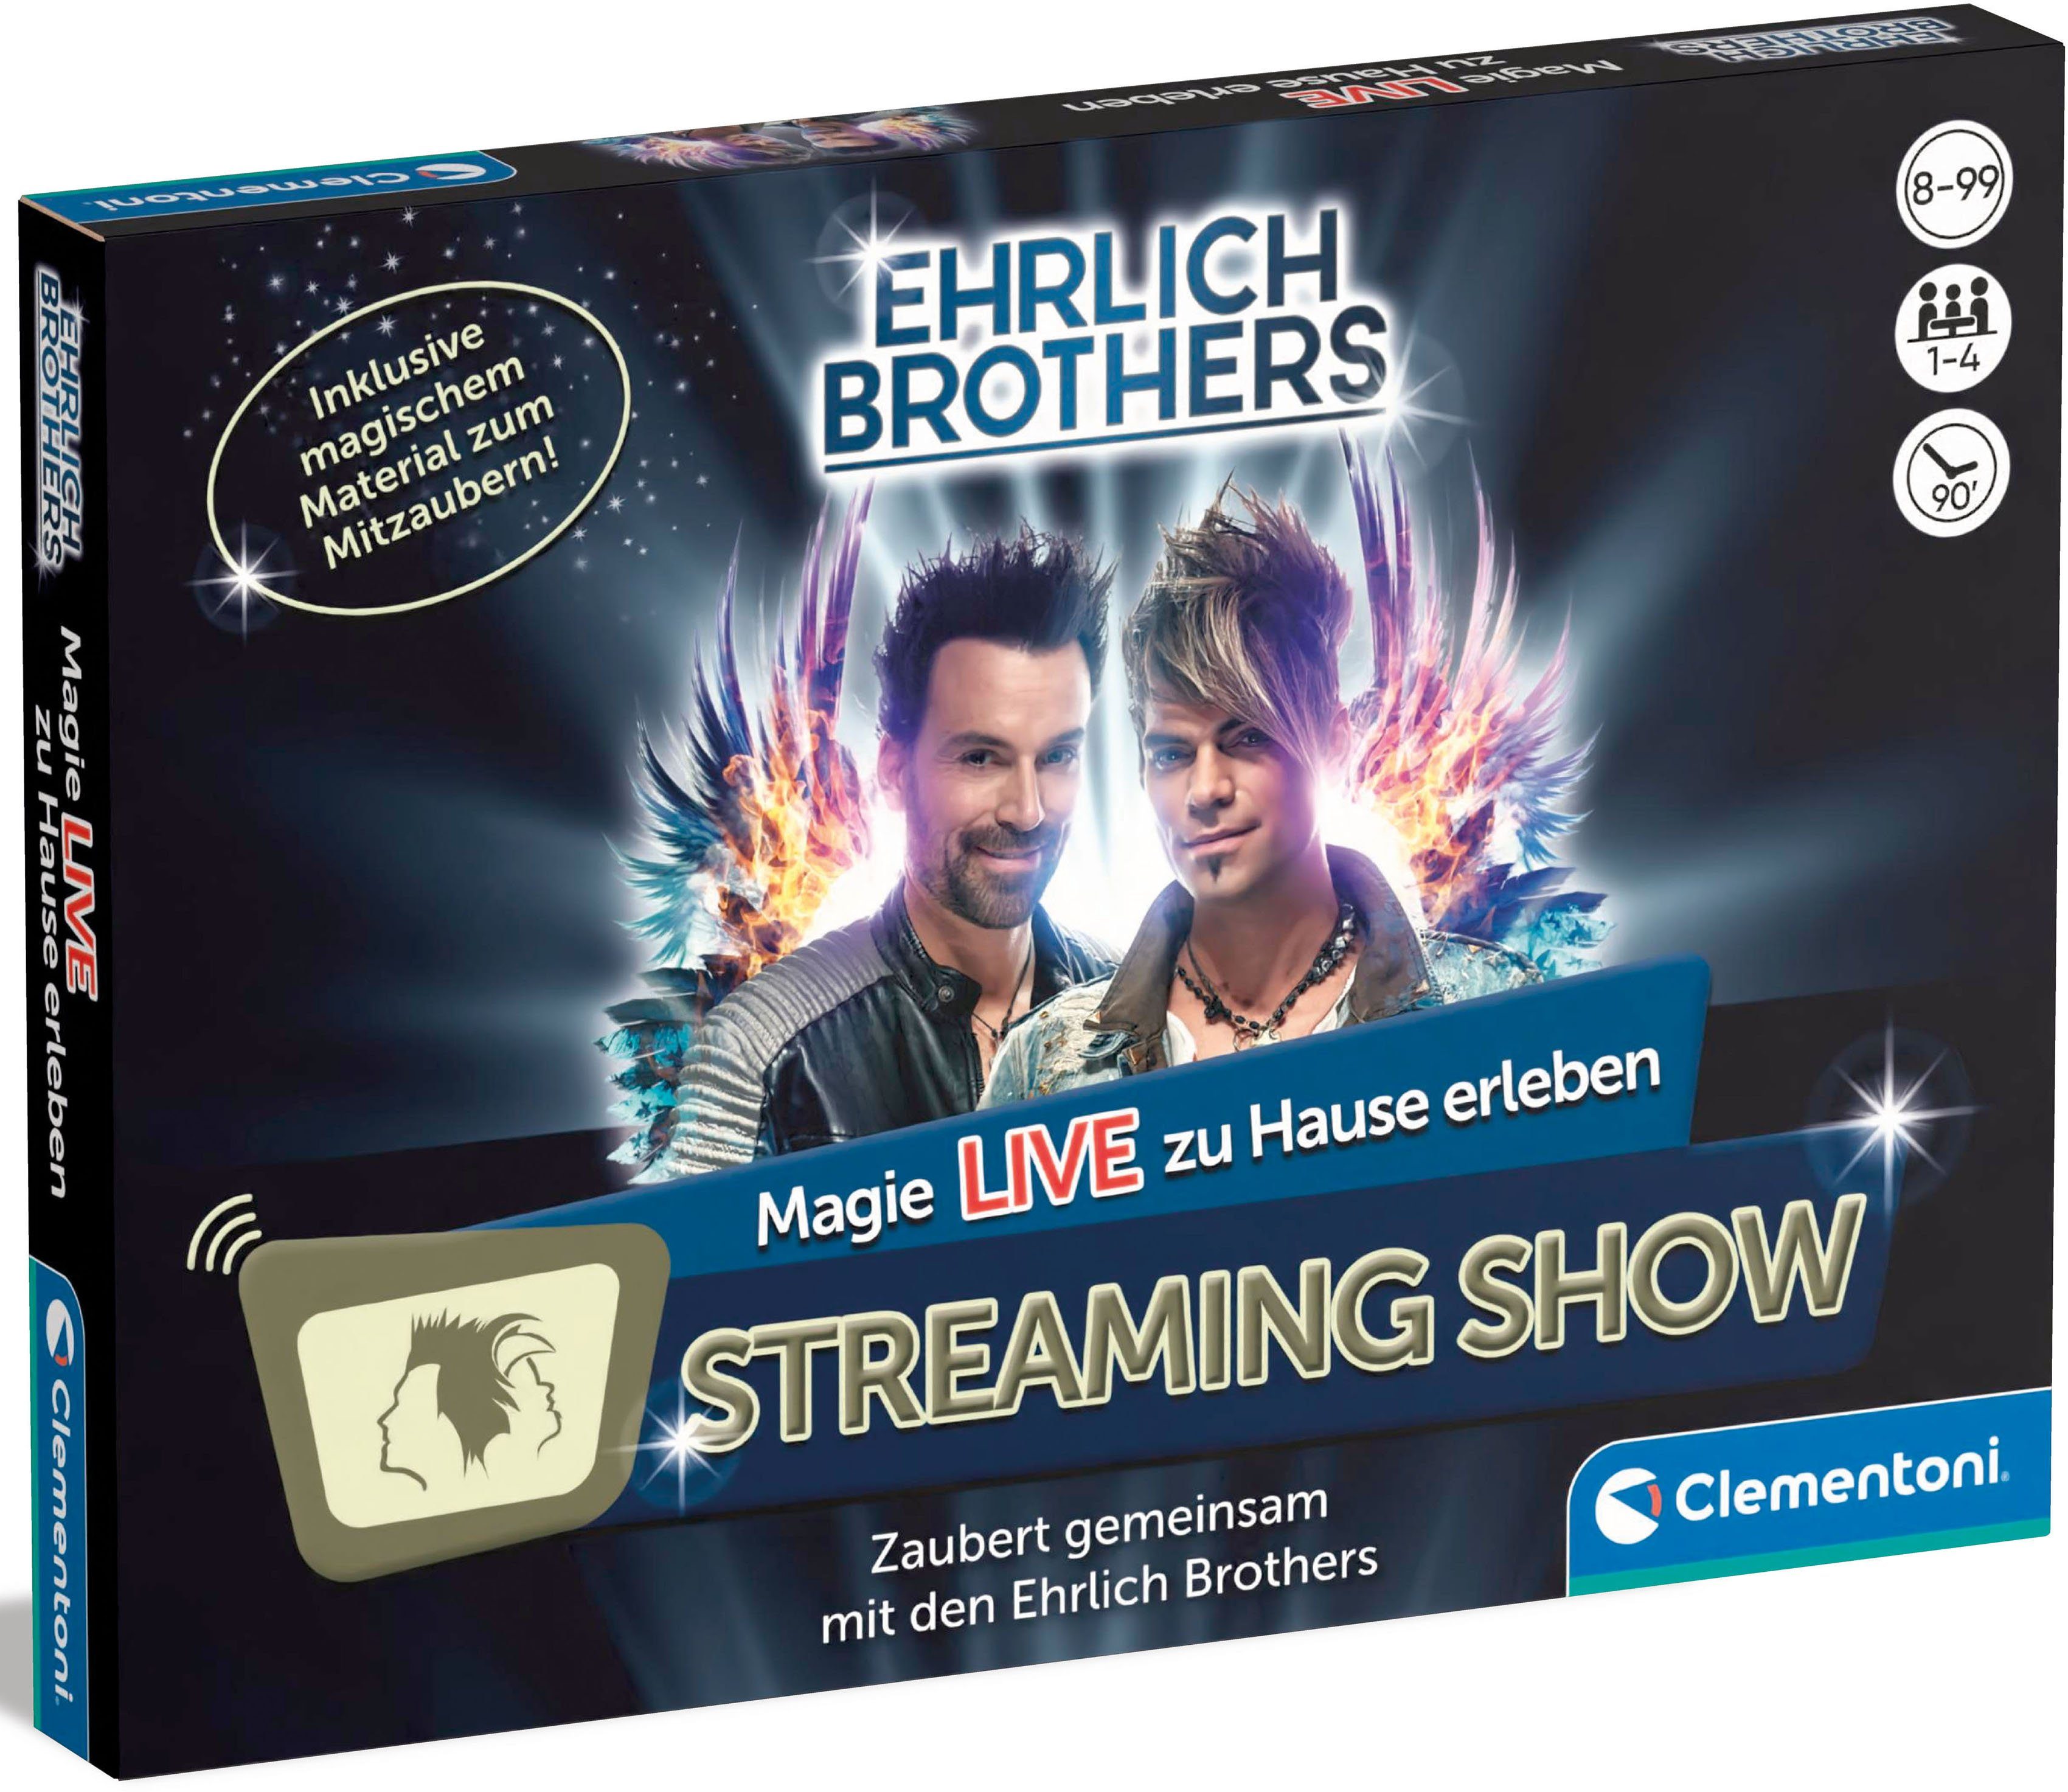 Vedes Clementoni® Brothers, Ehrlich in Streaming Europe Show, Zauberkasten Made